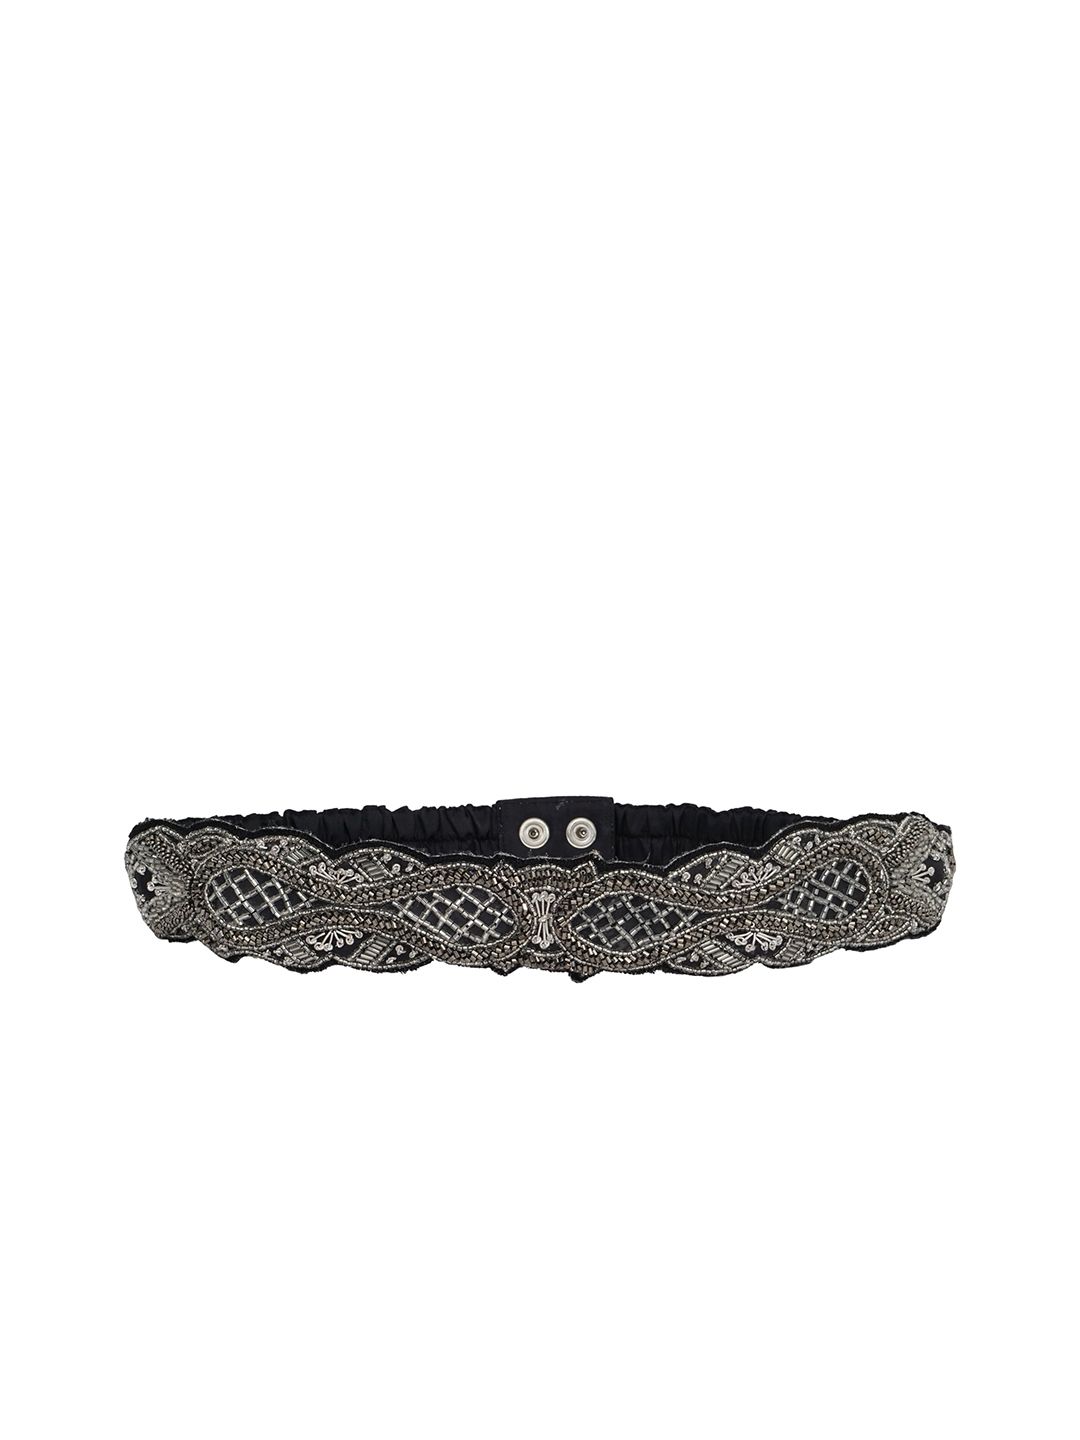 Diwaah Women Black & Silver-Toned Embellished Belt Price in India